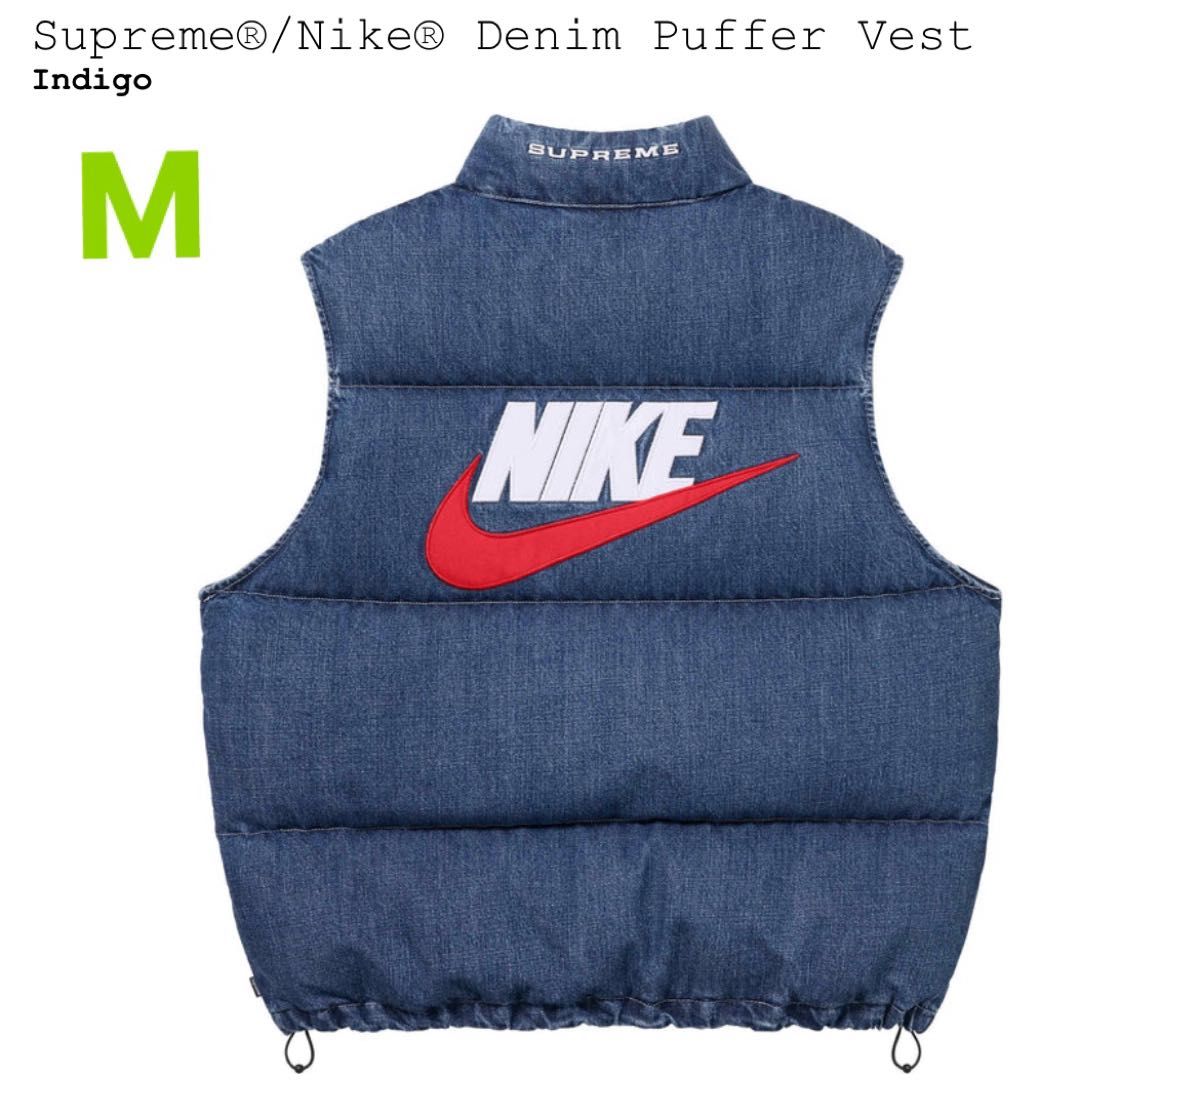 Supreme x Nike Denim Puffer Vest